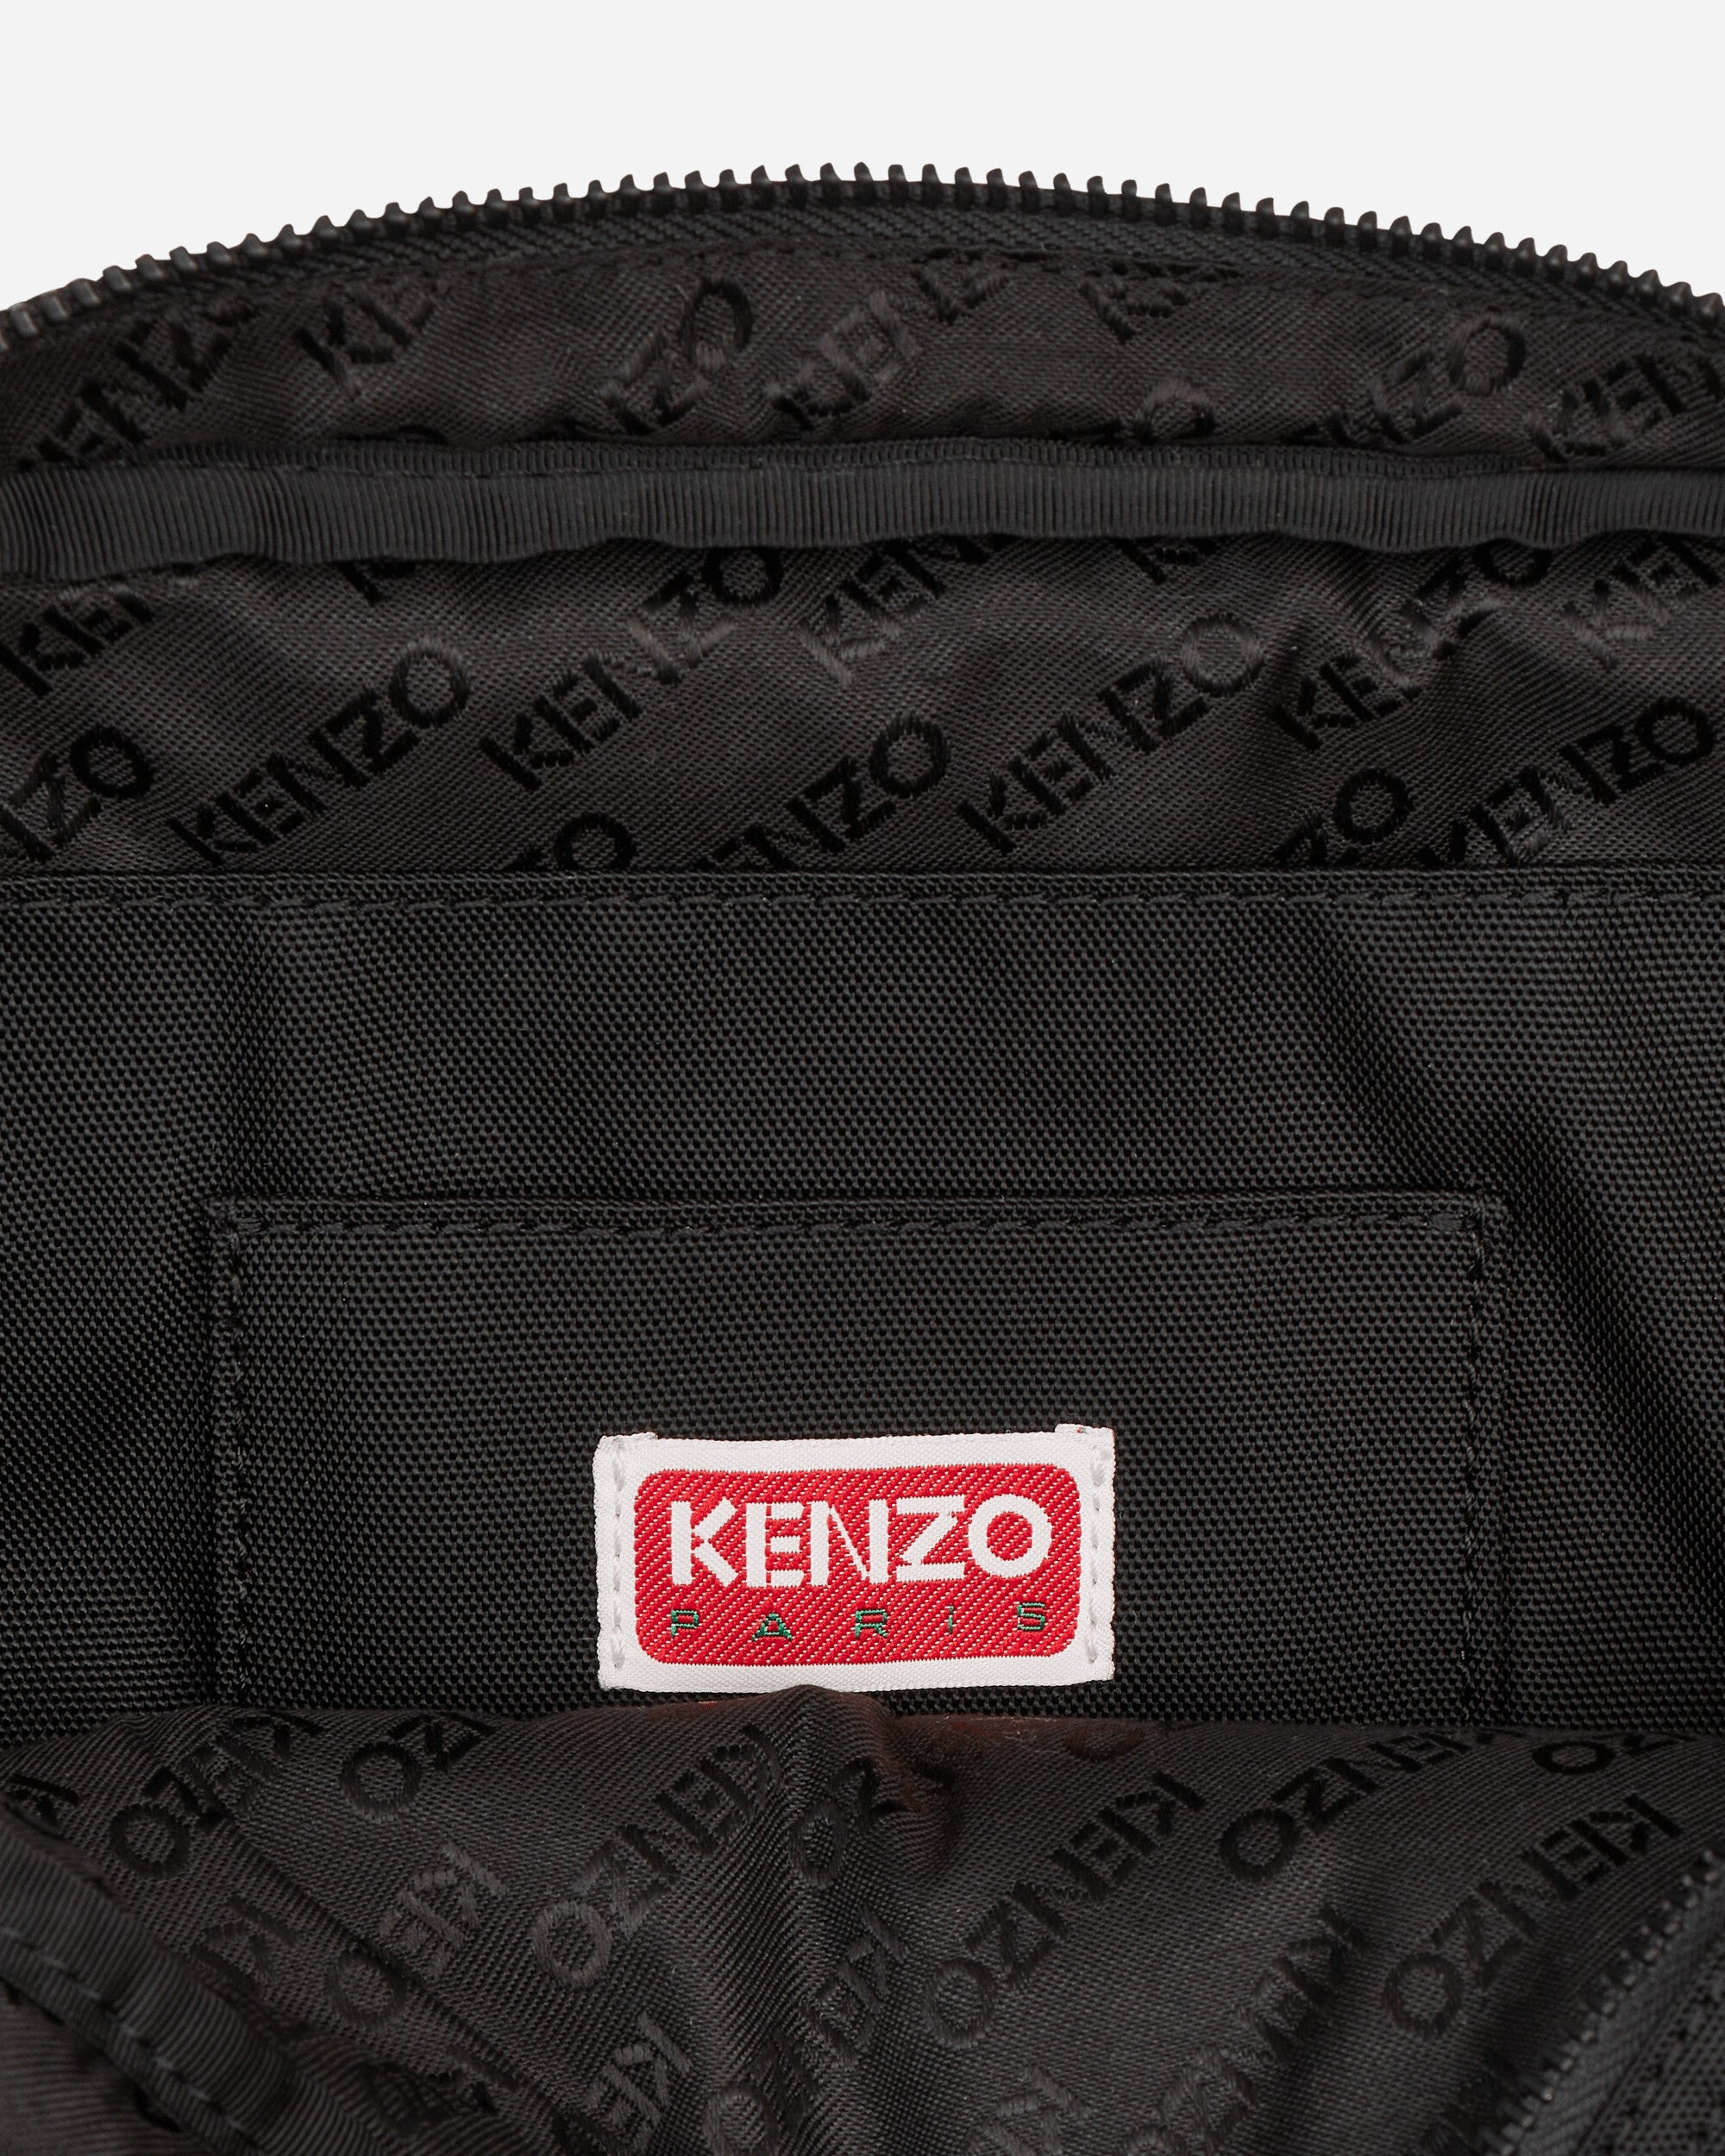 Kenzo Paris Belt Bag Black Bags and Backpacks Waistbags FD55SA467F26 99